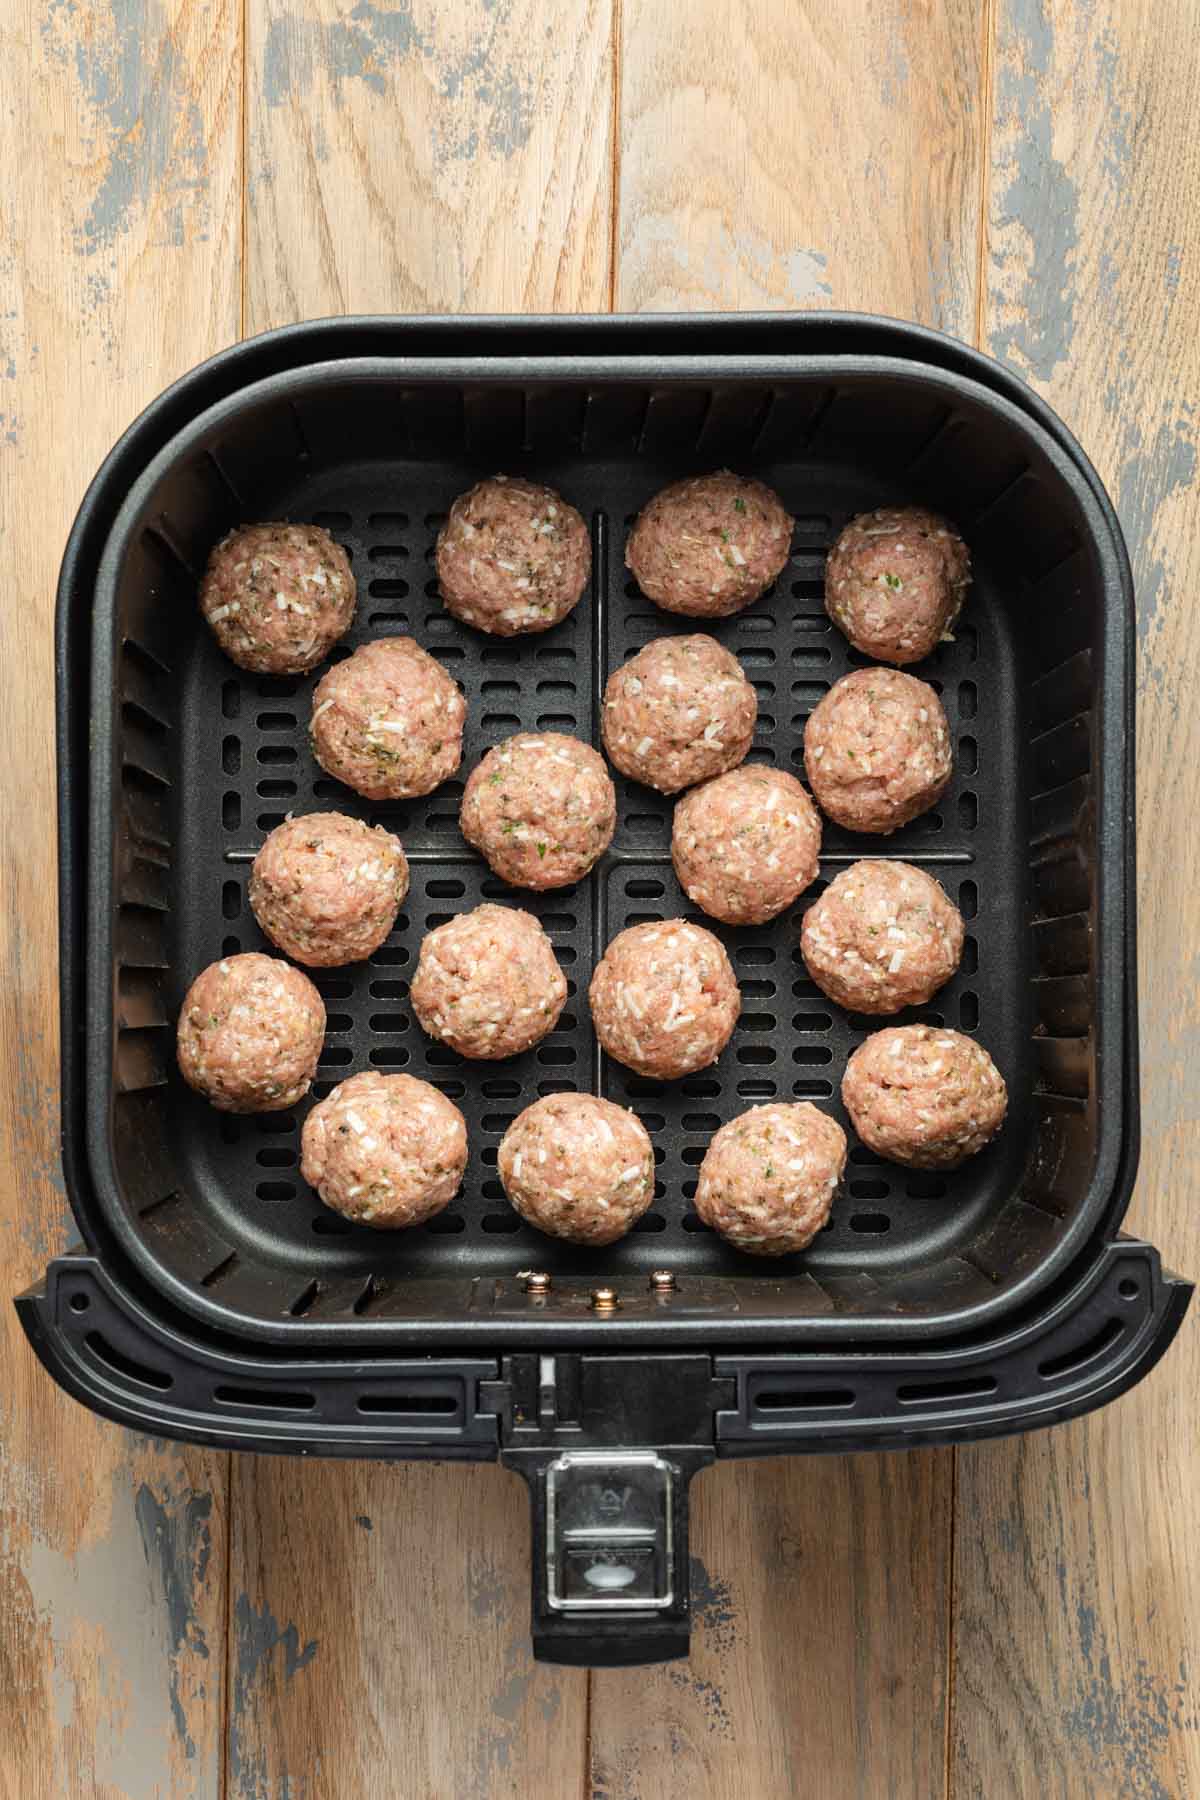 Uncooked meatballs in an air fryer basket.